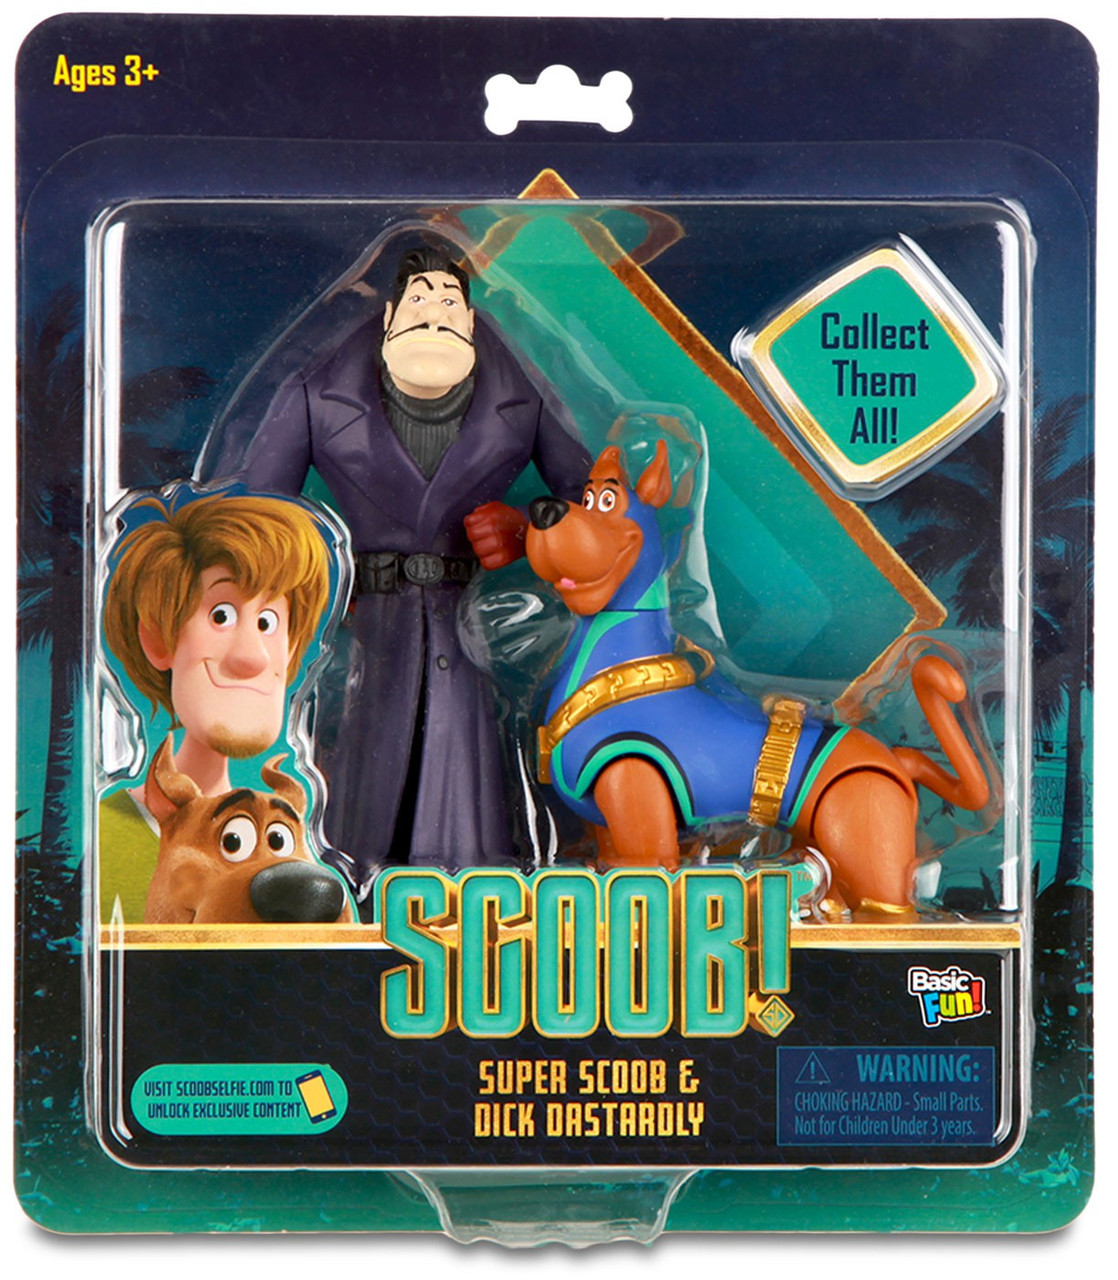 Scooby Doo Movie SUPER SCOOB & DICK DASTARDLY 2-Pack Figures Details ...